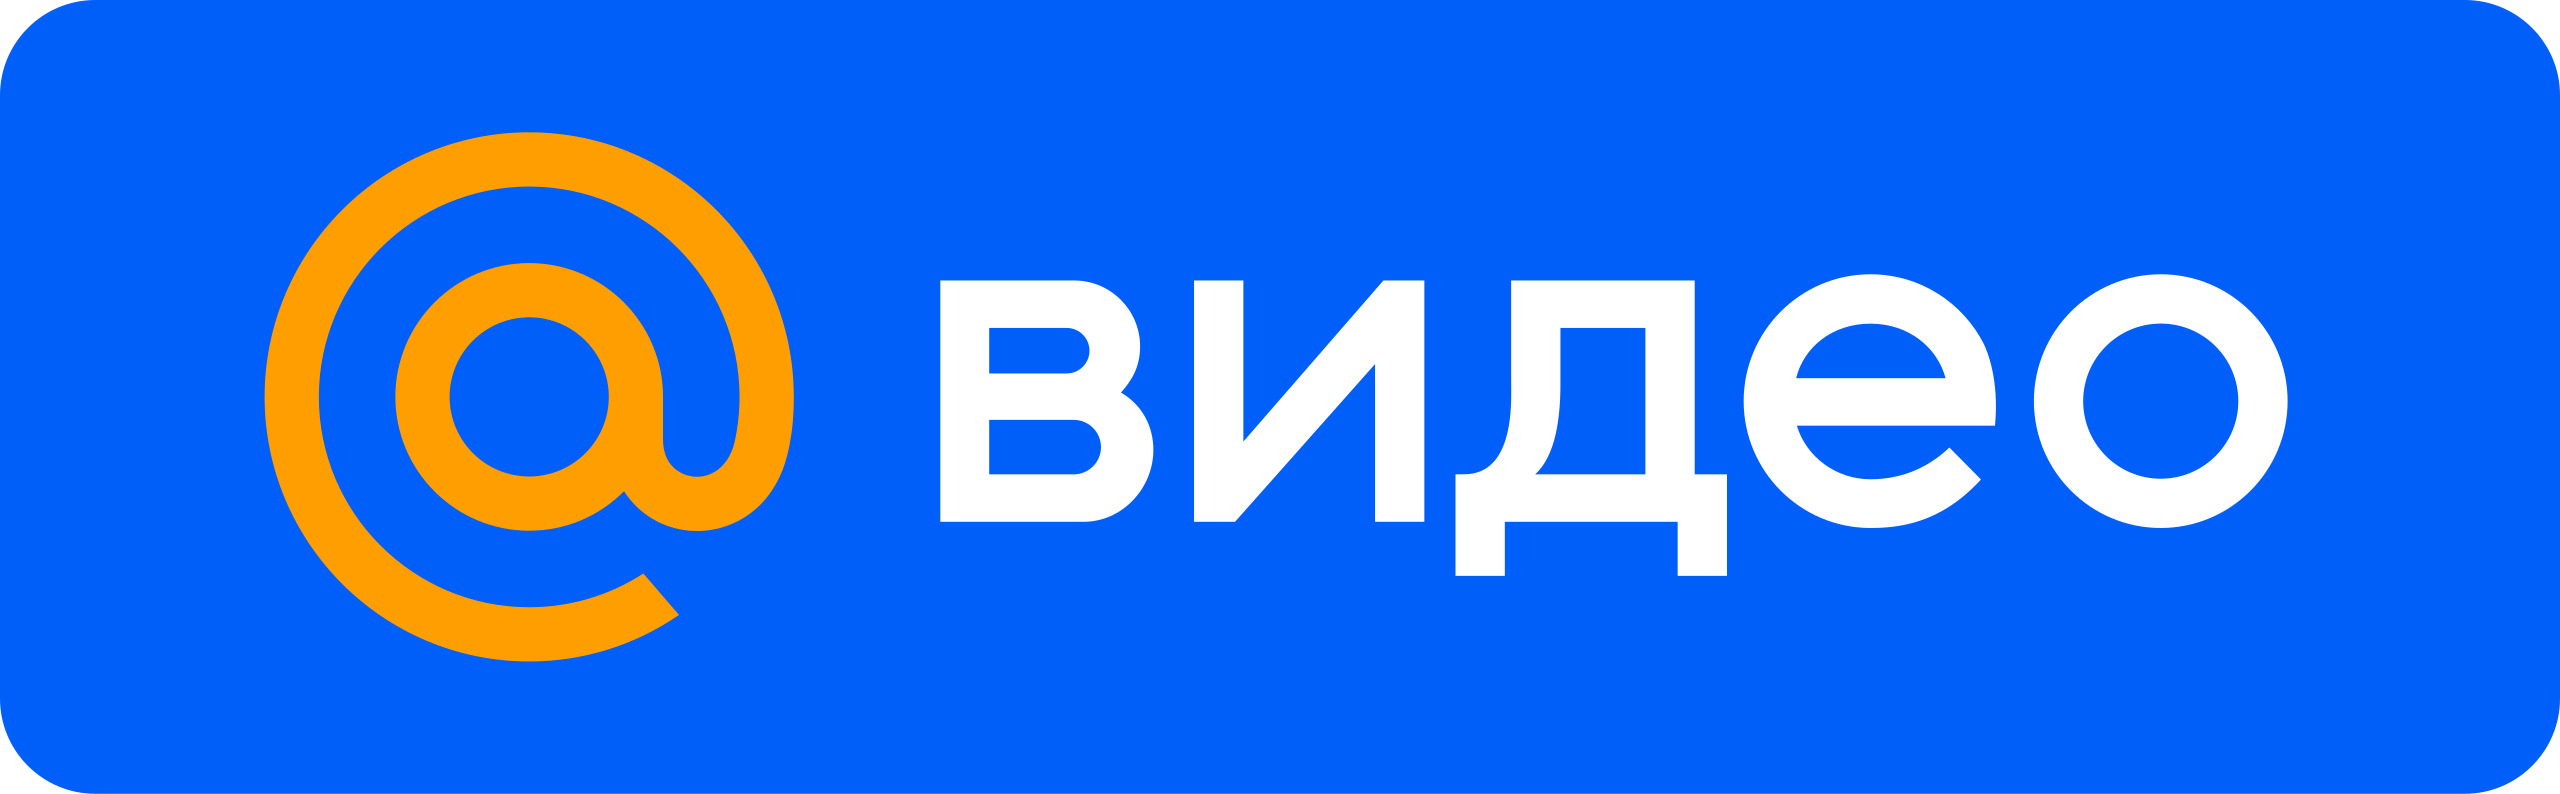 Https mail ru f. Майл ру. Видео mail.ru. Mail.ru логотип. Логотип почты мейл.